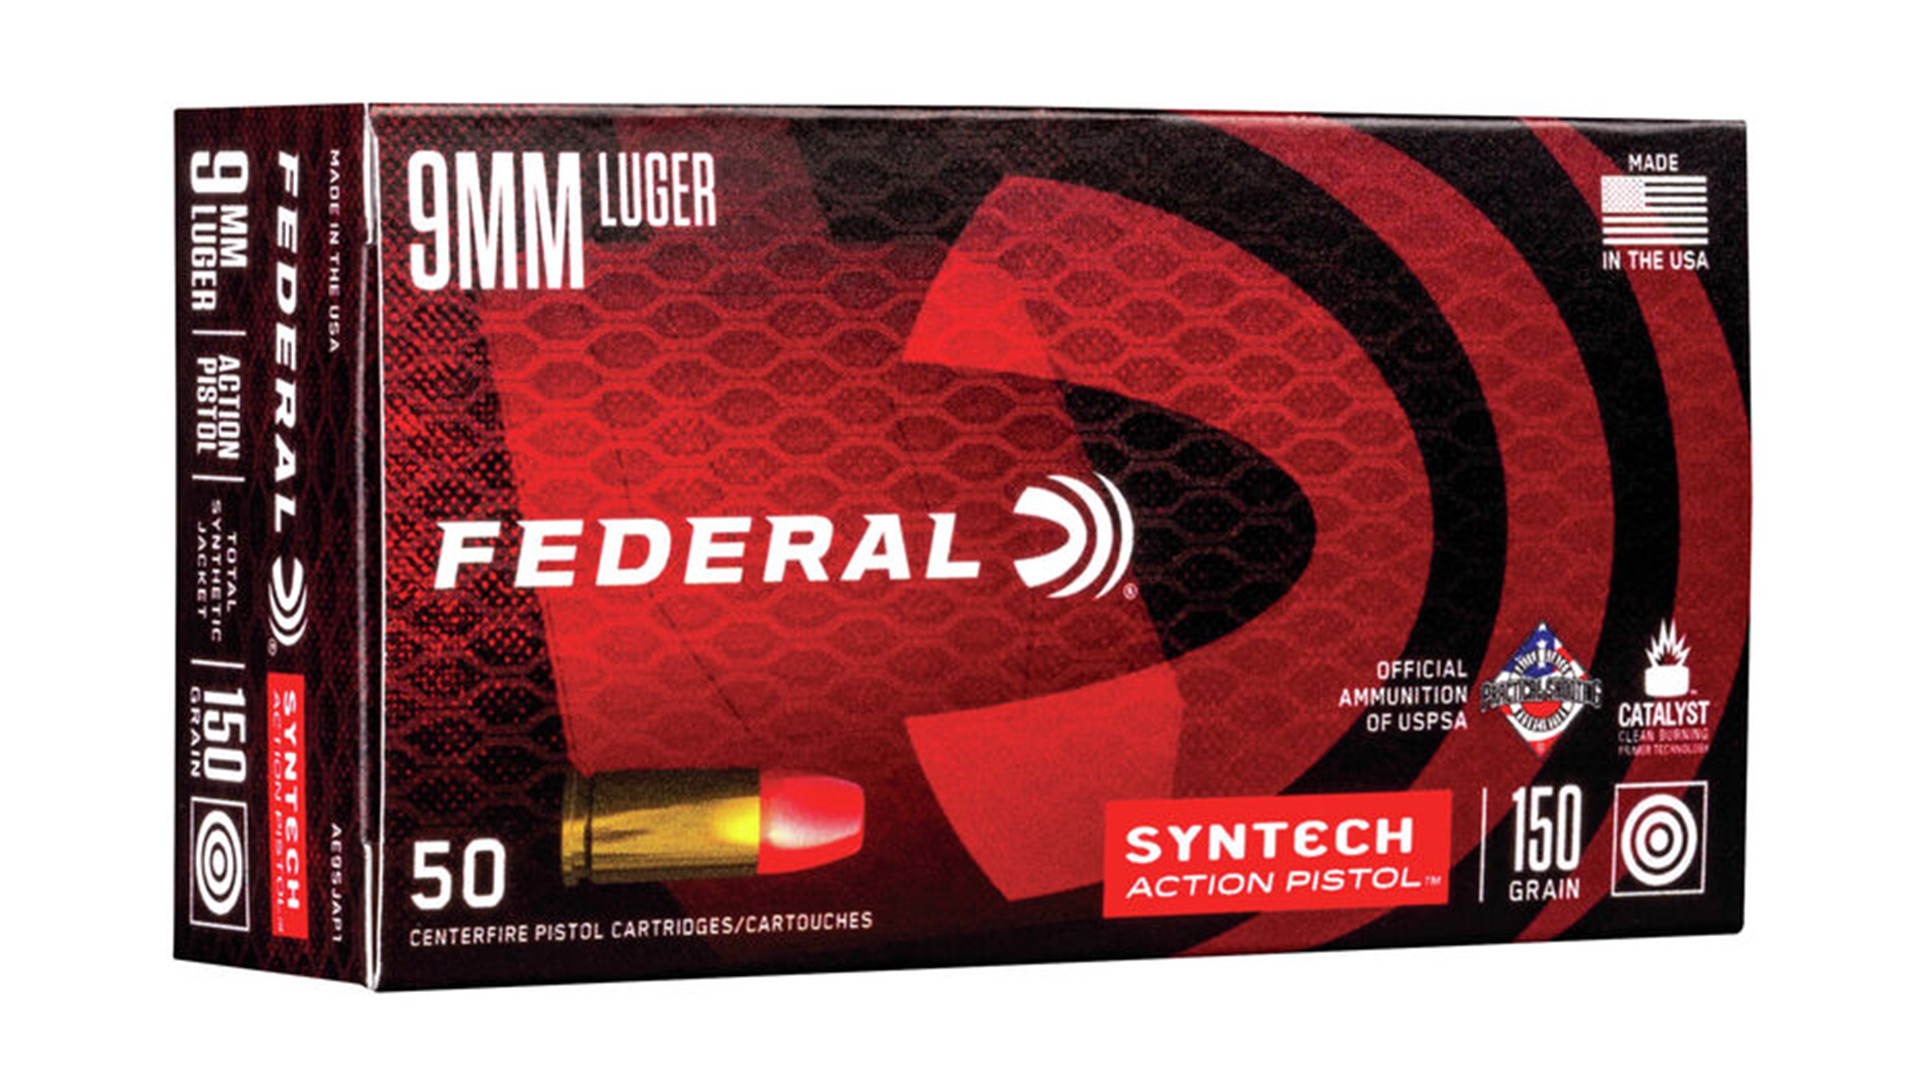 Federal Syntech Action Pistol ammunition